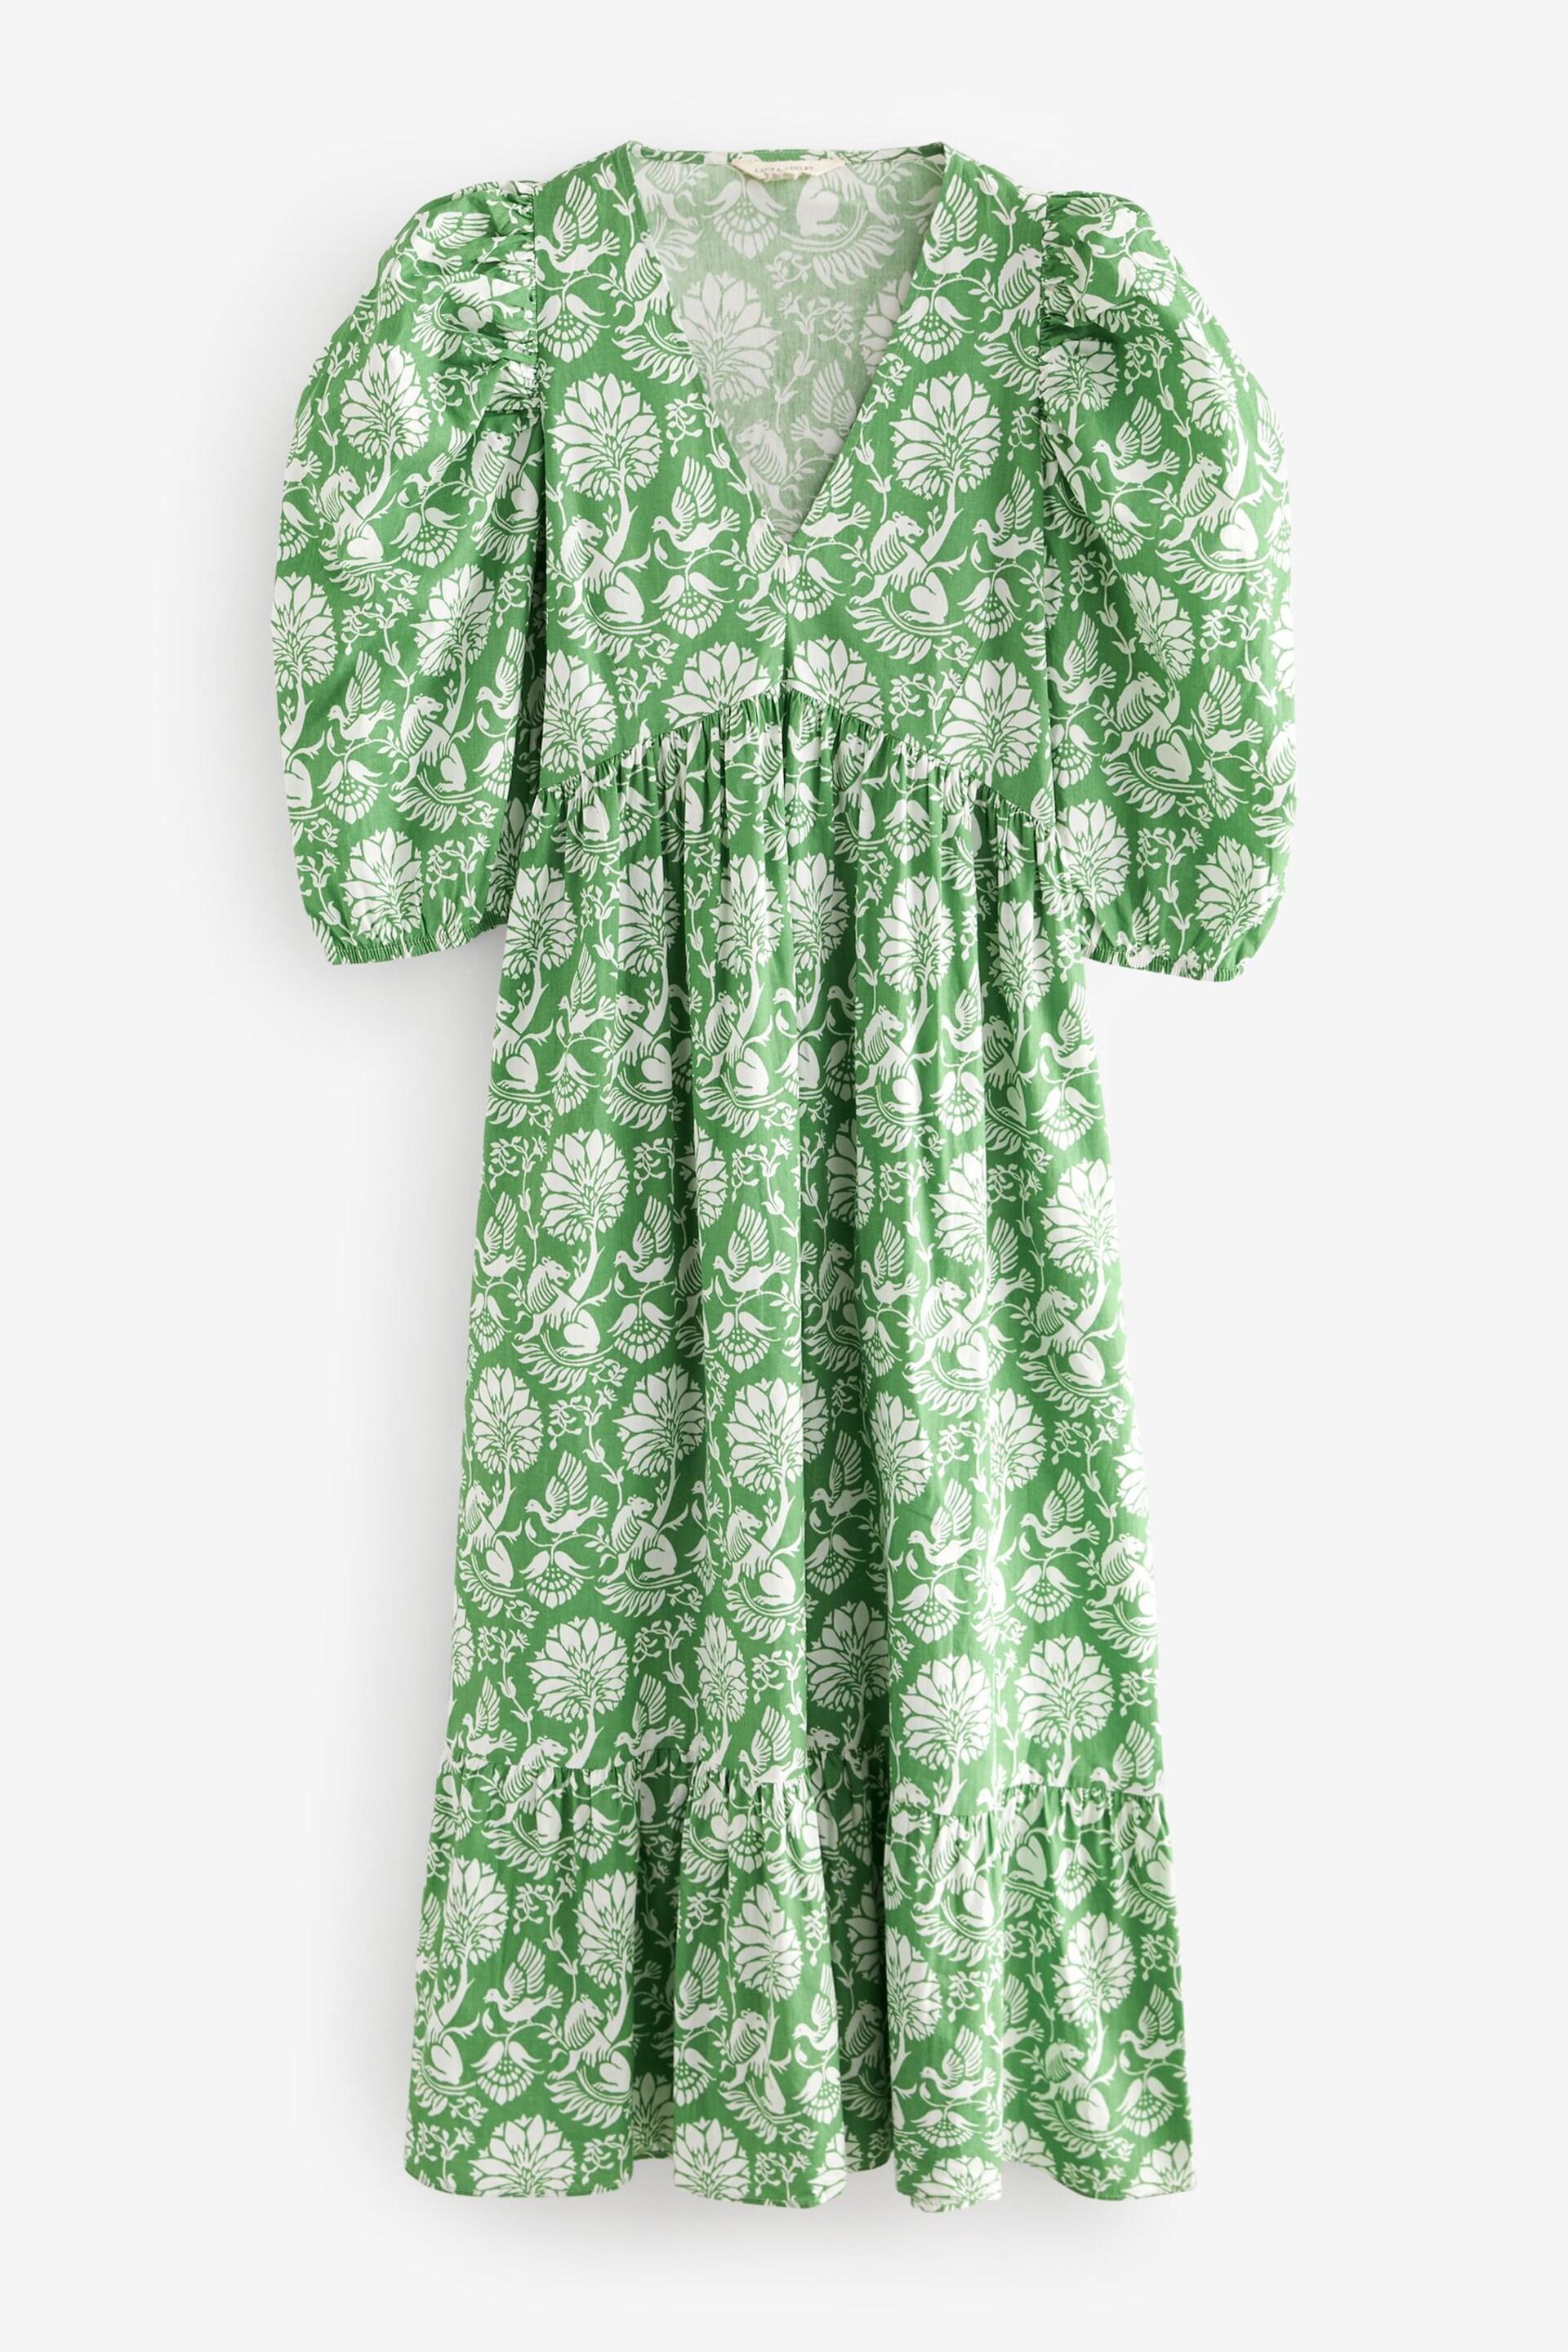 Laura Ashley Green Camelot Print Green Midaxi Dress - Image 5 of 6